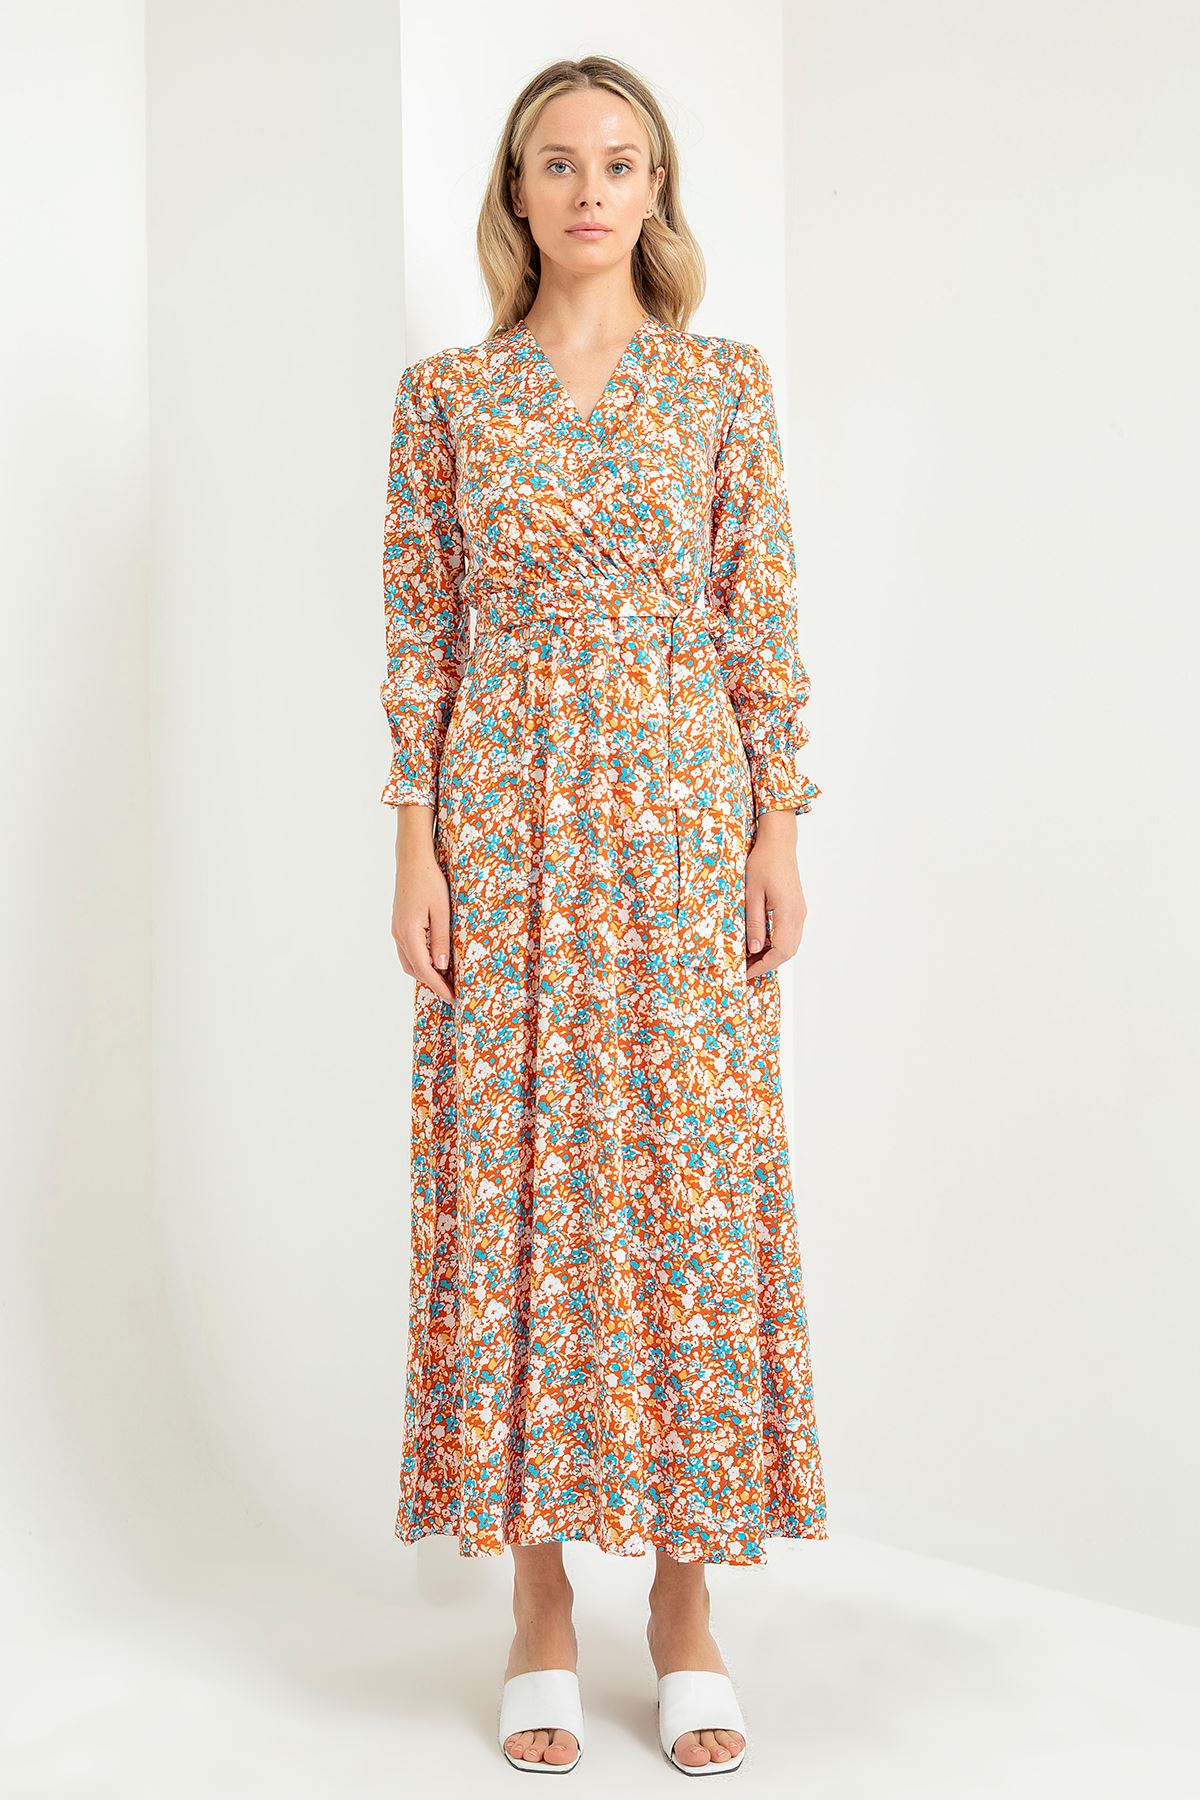 Viscose Fabric Long Sleeve V-Neck Long A Cut Flower Print Belted Women Dress - Orange